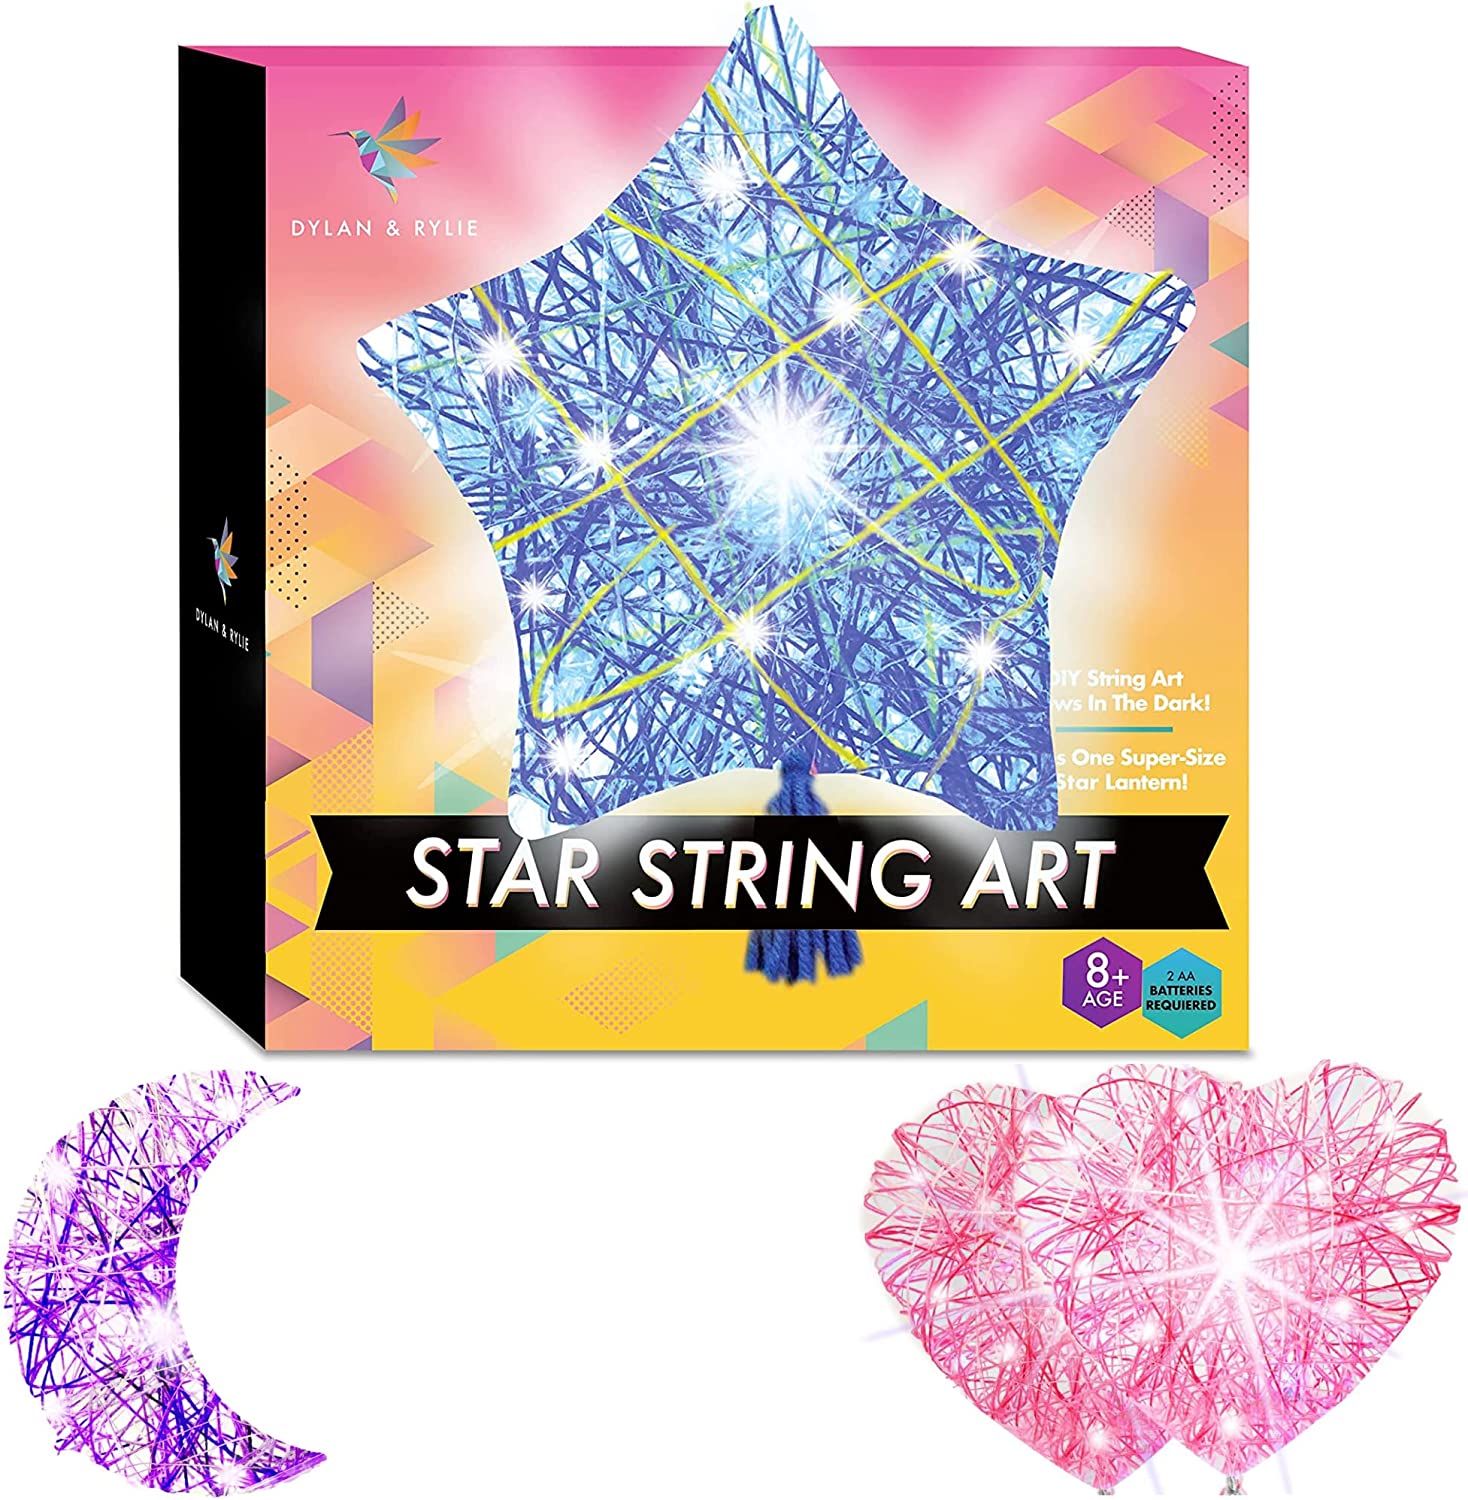  Dylan & Rylie DIY 3D Star Lantern String Art Kit - Easy Craft  for Kids 8+, Glowing Room Decor, Creative Gift for Children